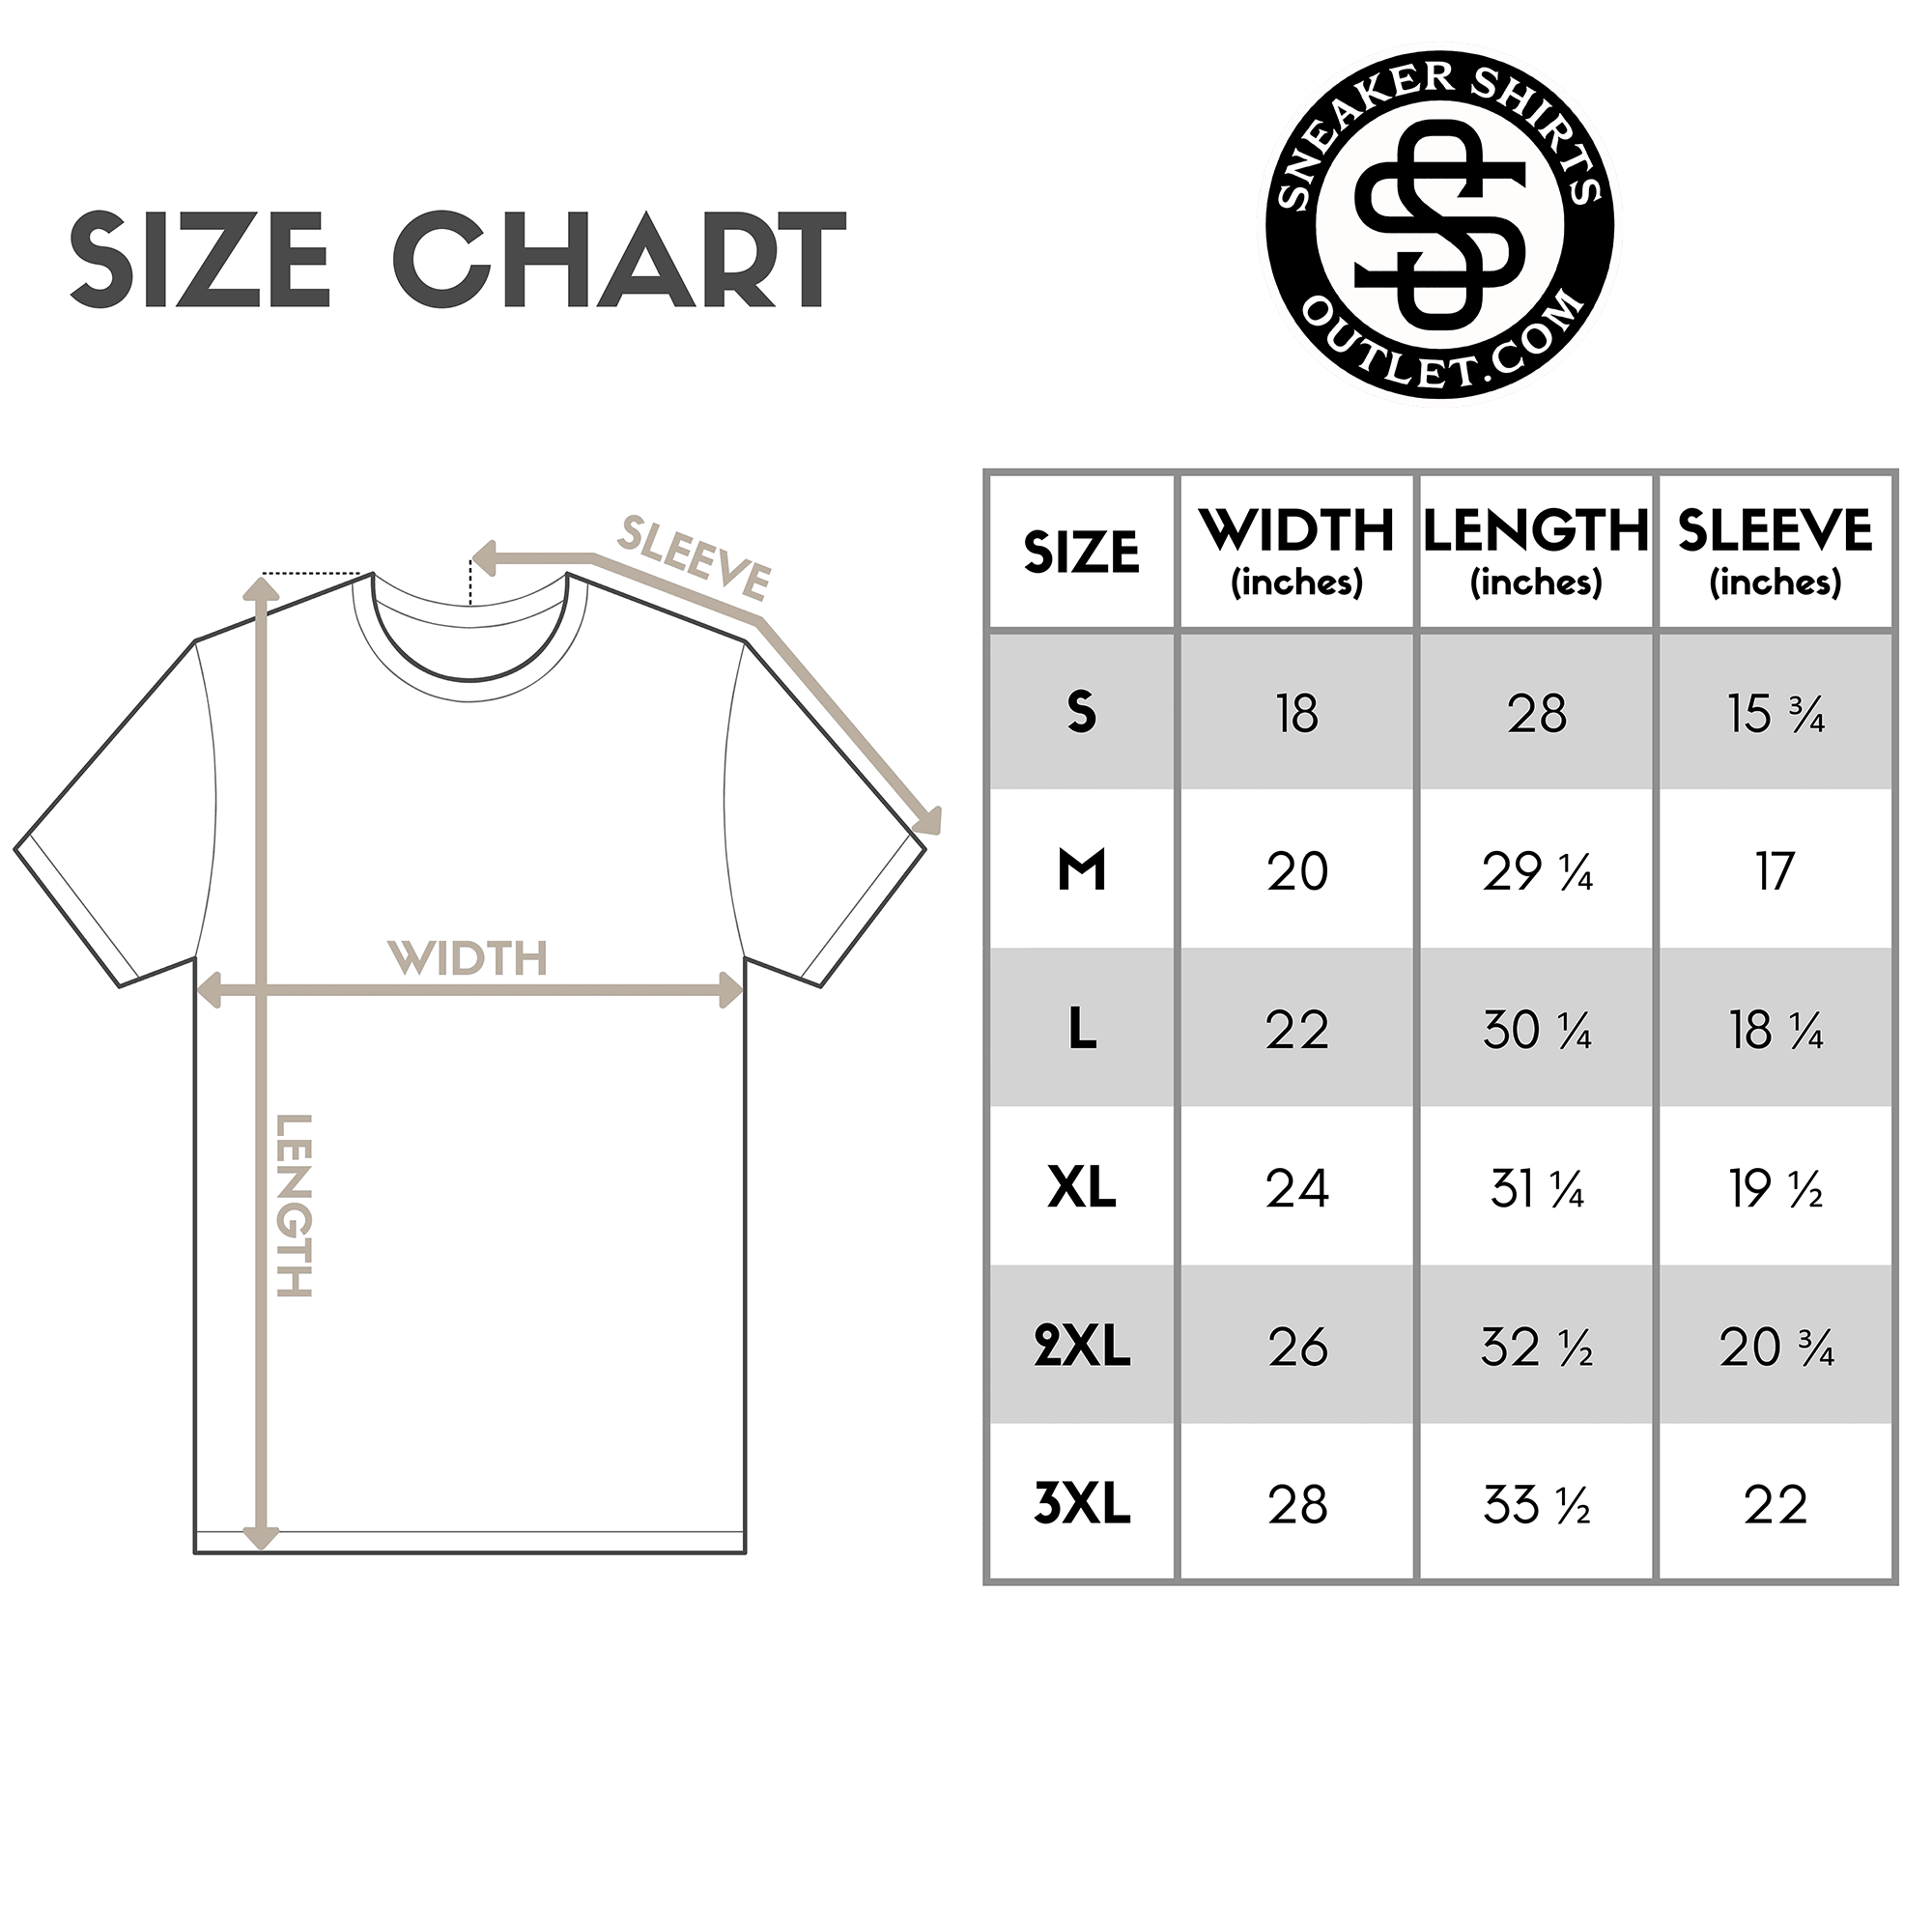 AJ 1 Mid Paint Drip (GS) Shirt - More Money Less Friends - Sneaker Shirts Outlet